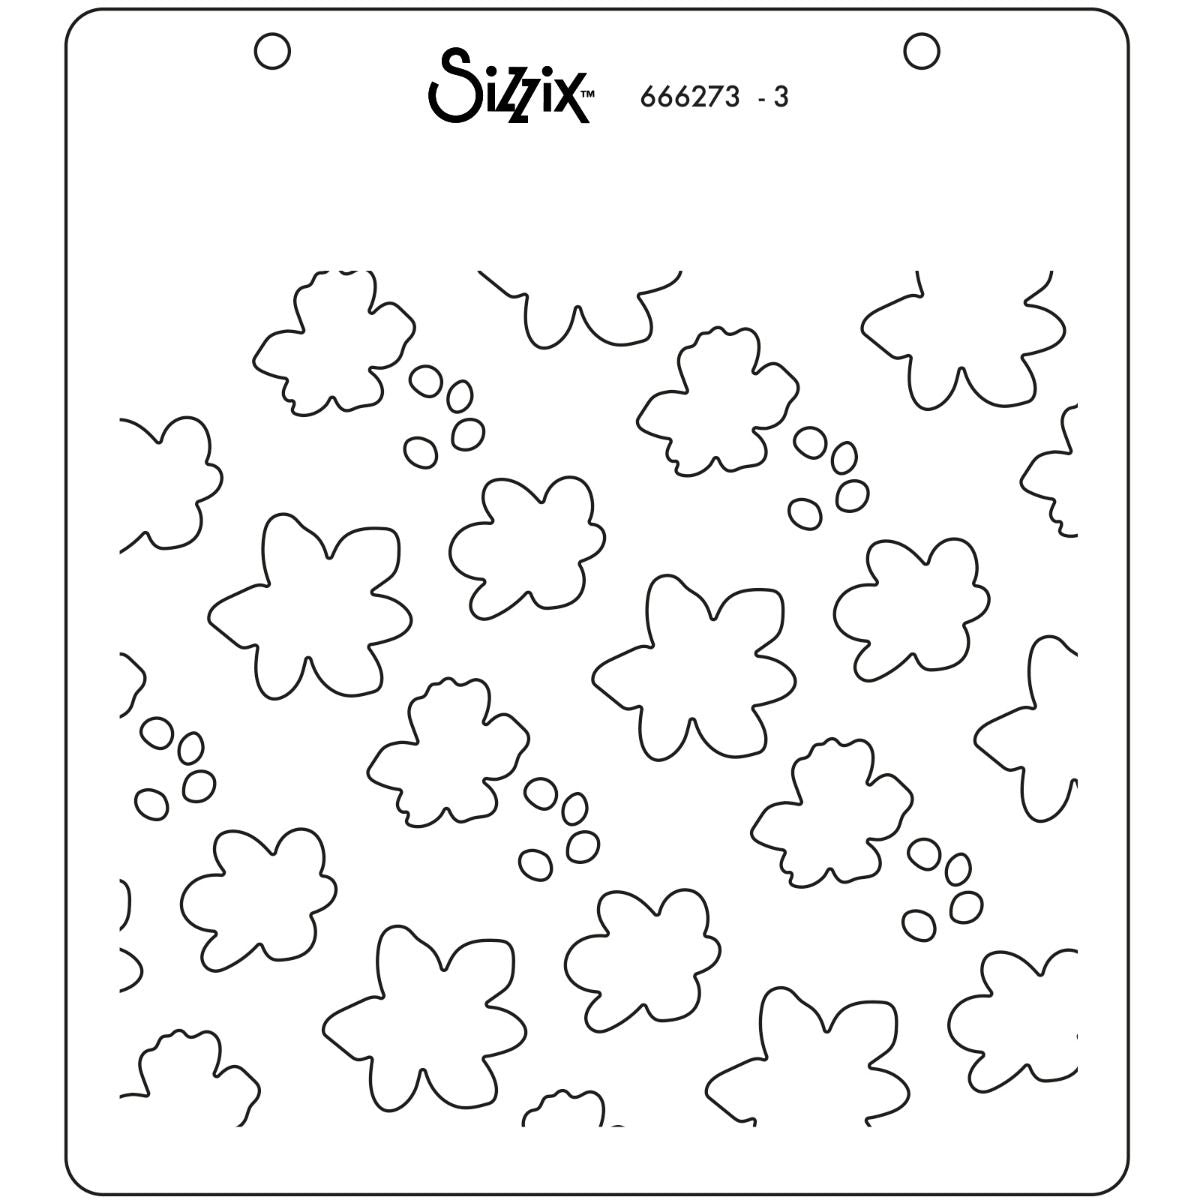 Sizzix Layered Stencils 4PK - Flower Patch 666273